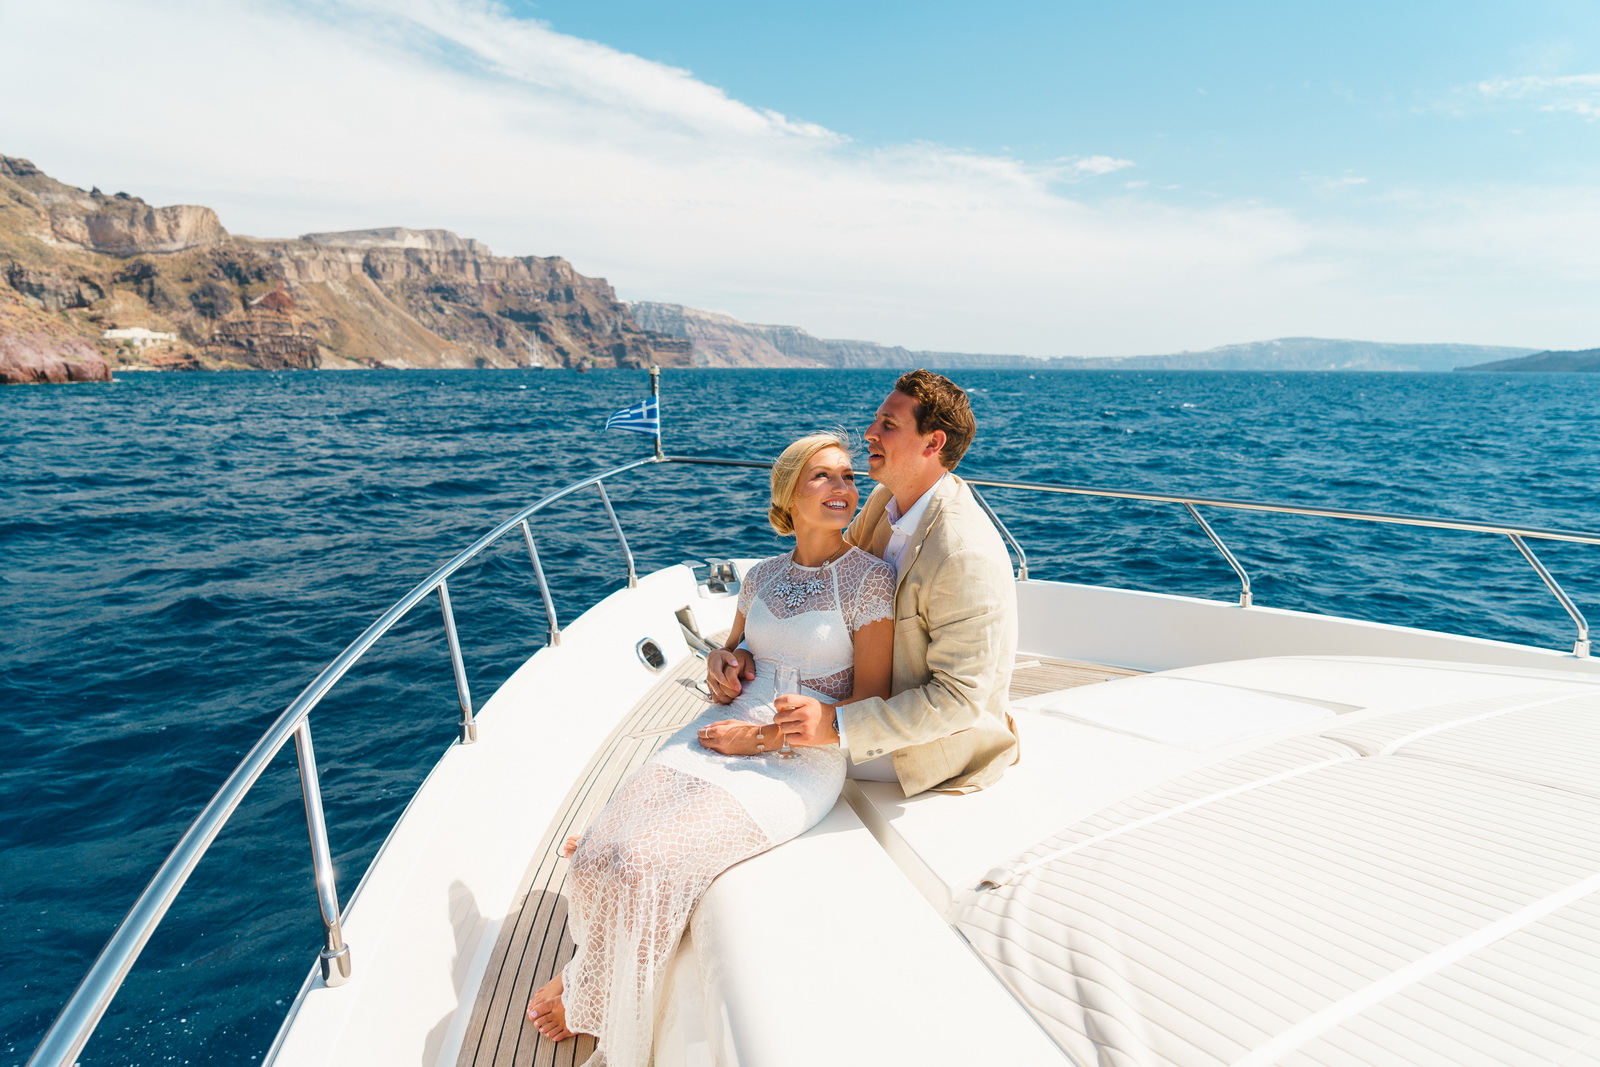 Renting an elegant yacht for your best adventurous wedding ceremony or honeymoon travel: свадьба на санторини, свадебное агентство Julia Veselova - Фото 4